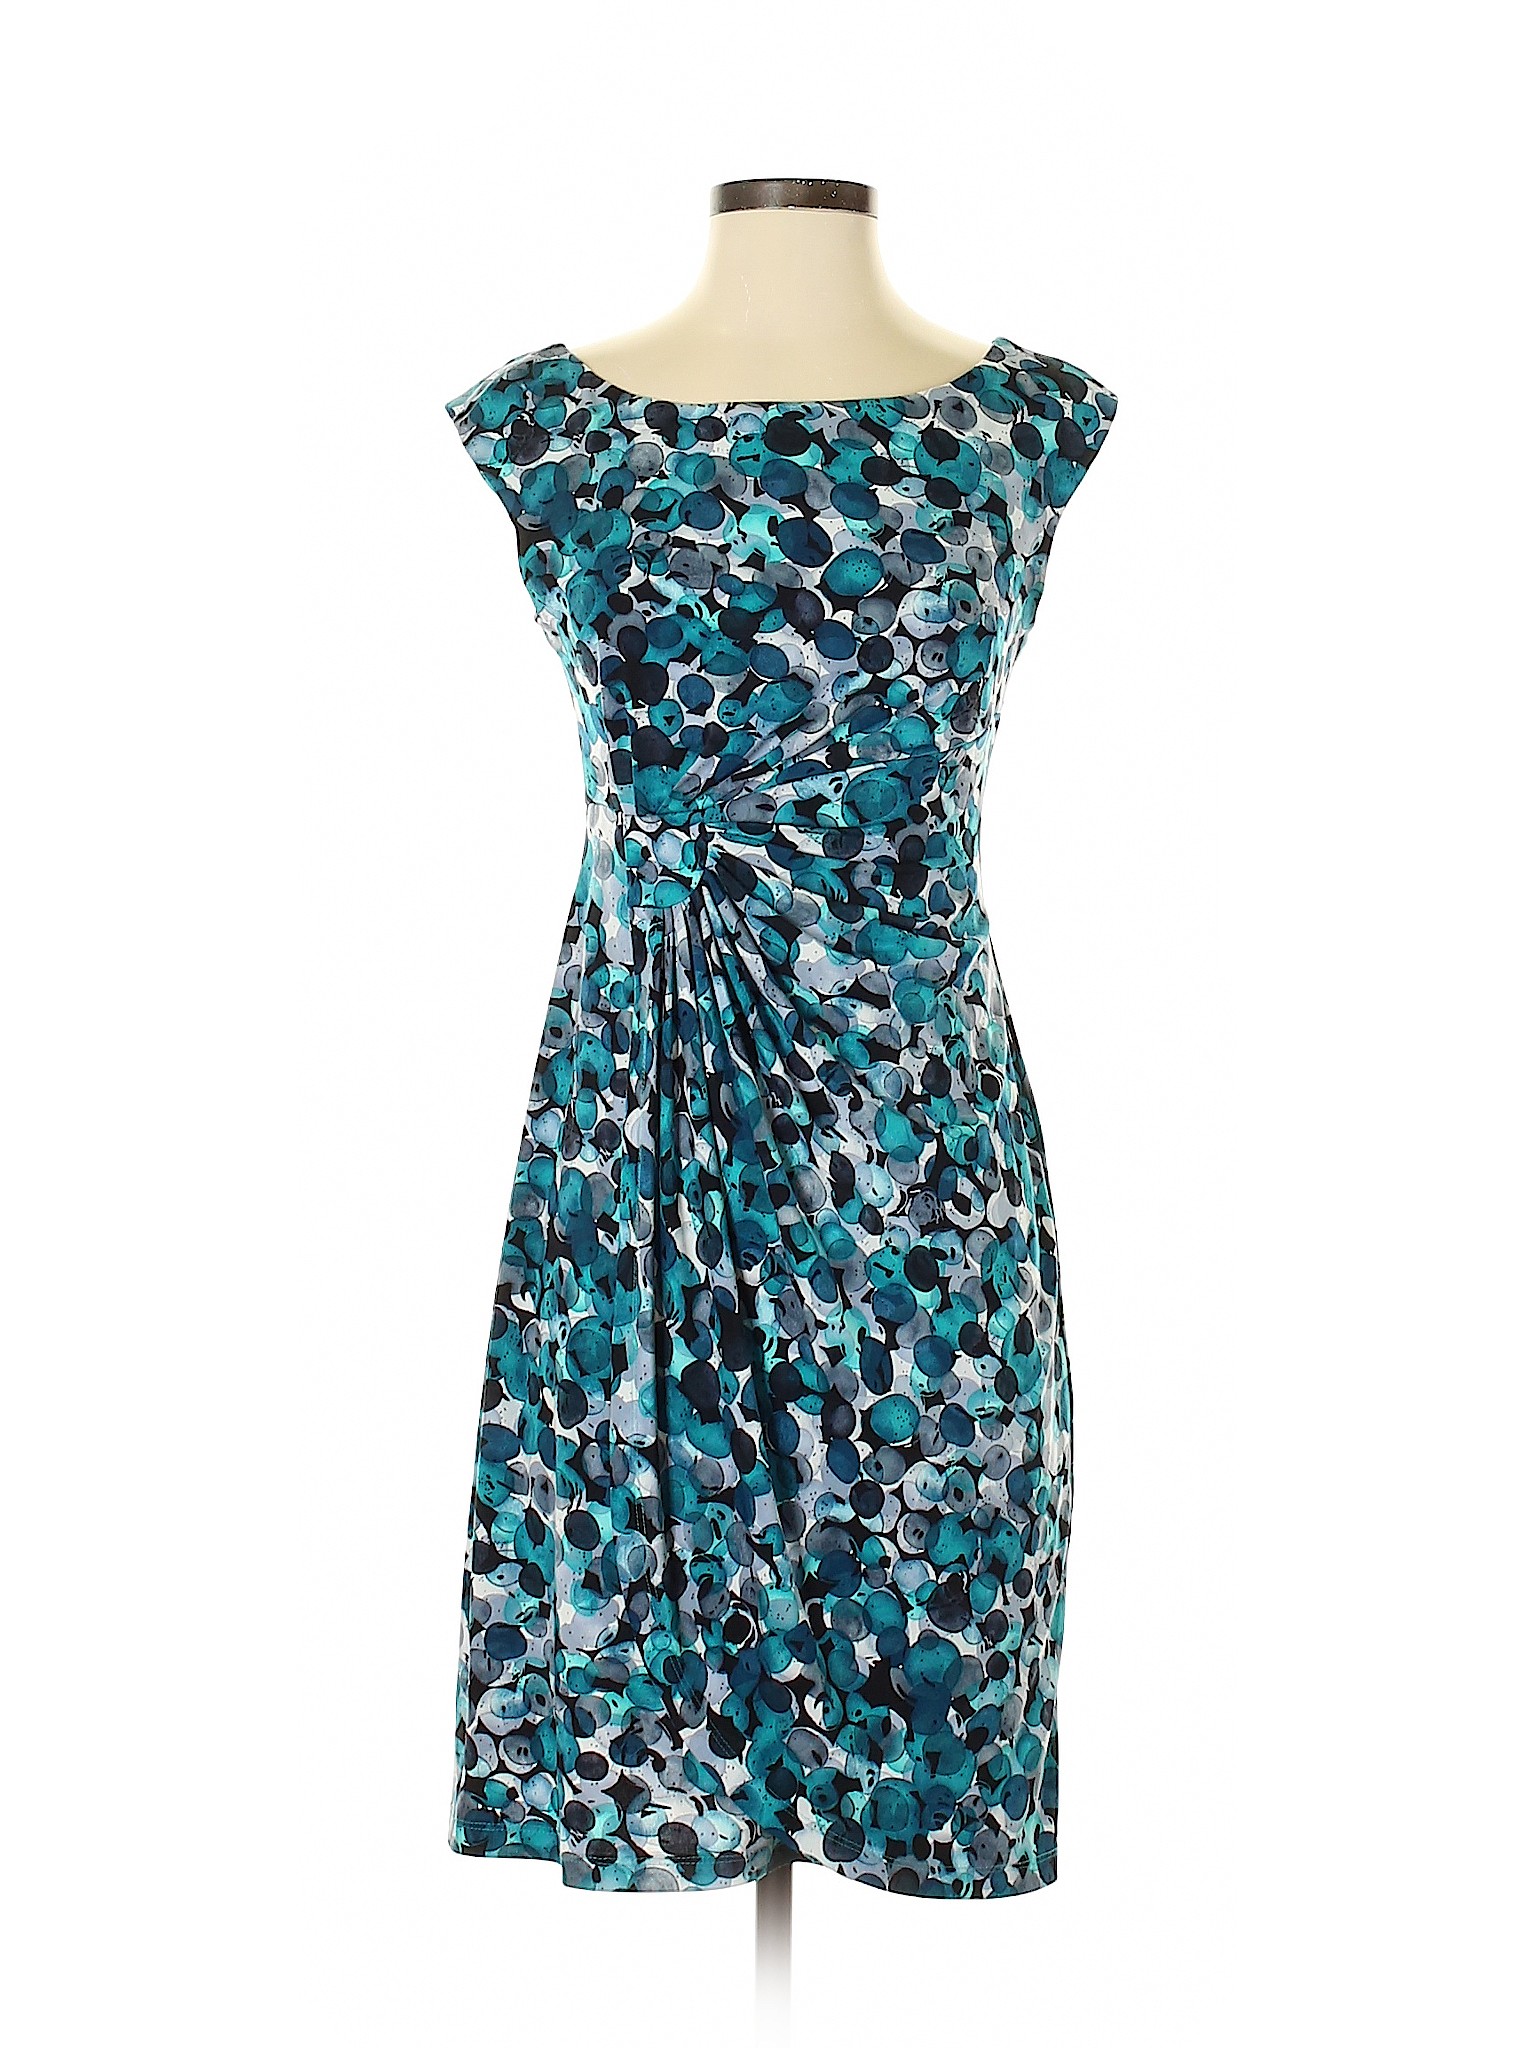 Connected Apparel Women Blue Casual Dress 4 Petite | eBay